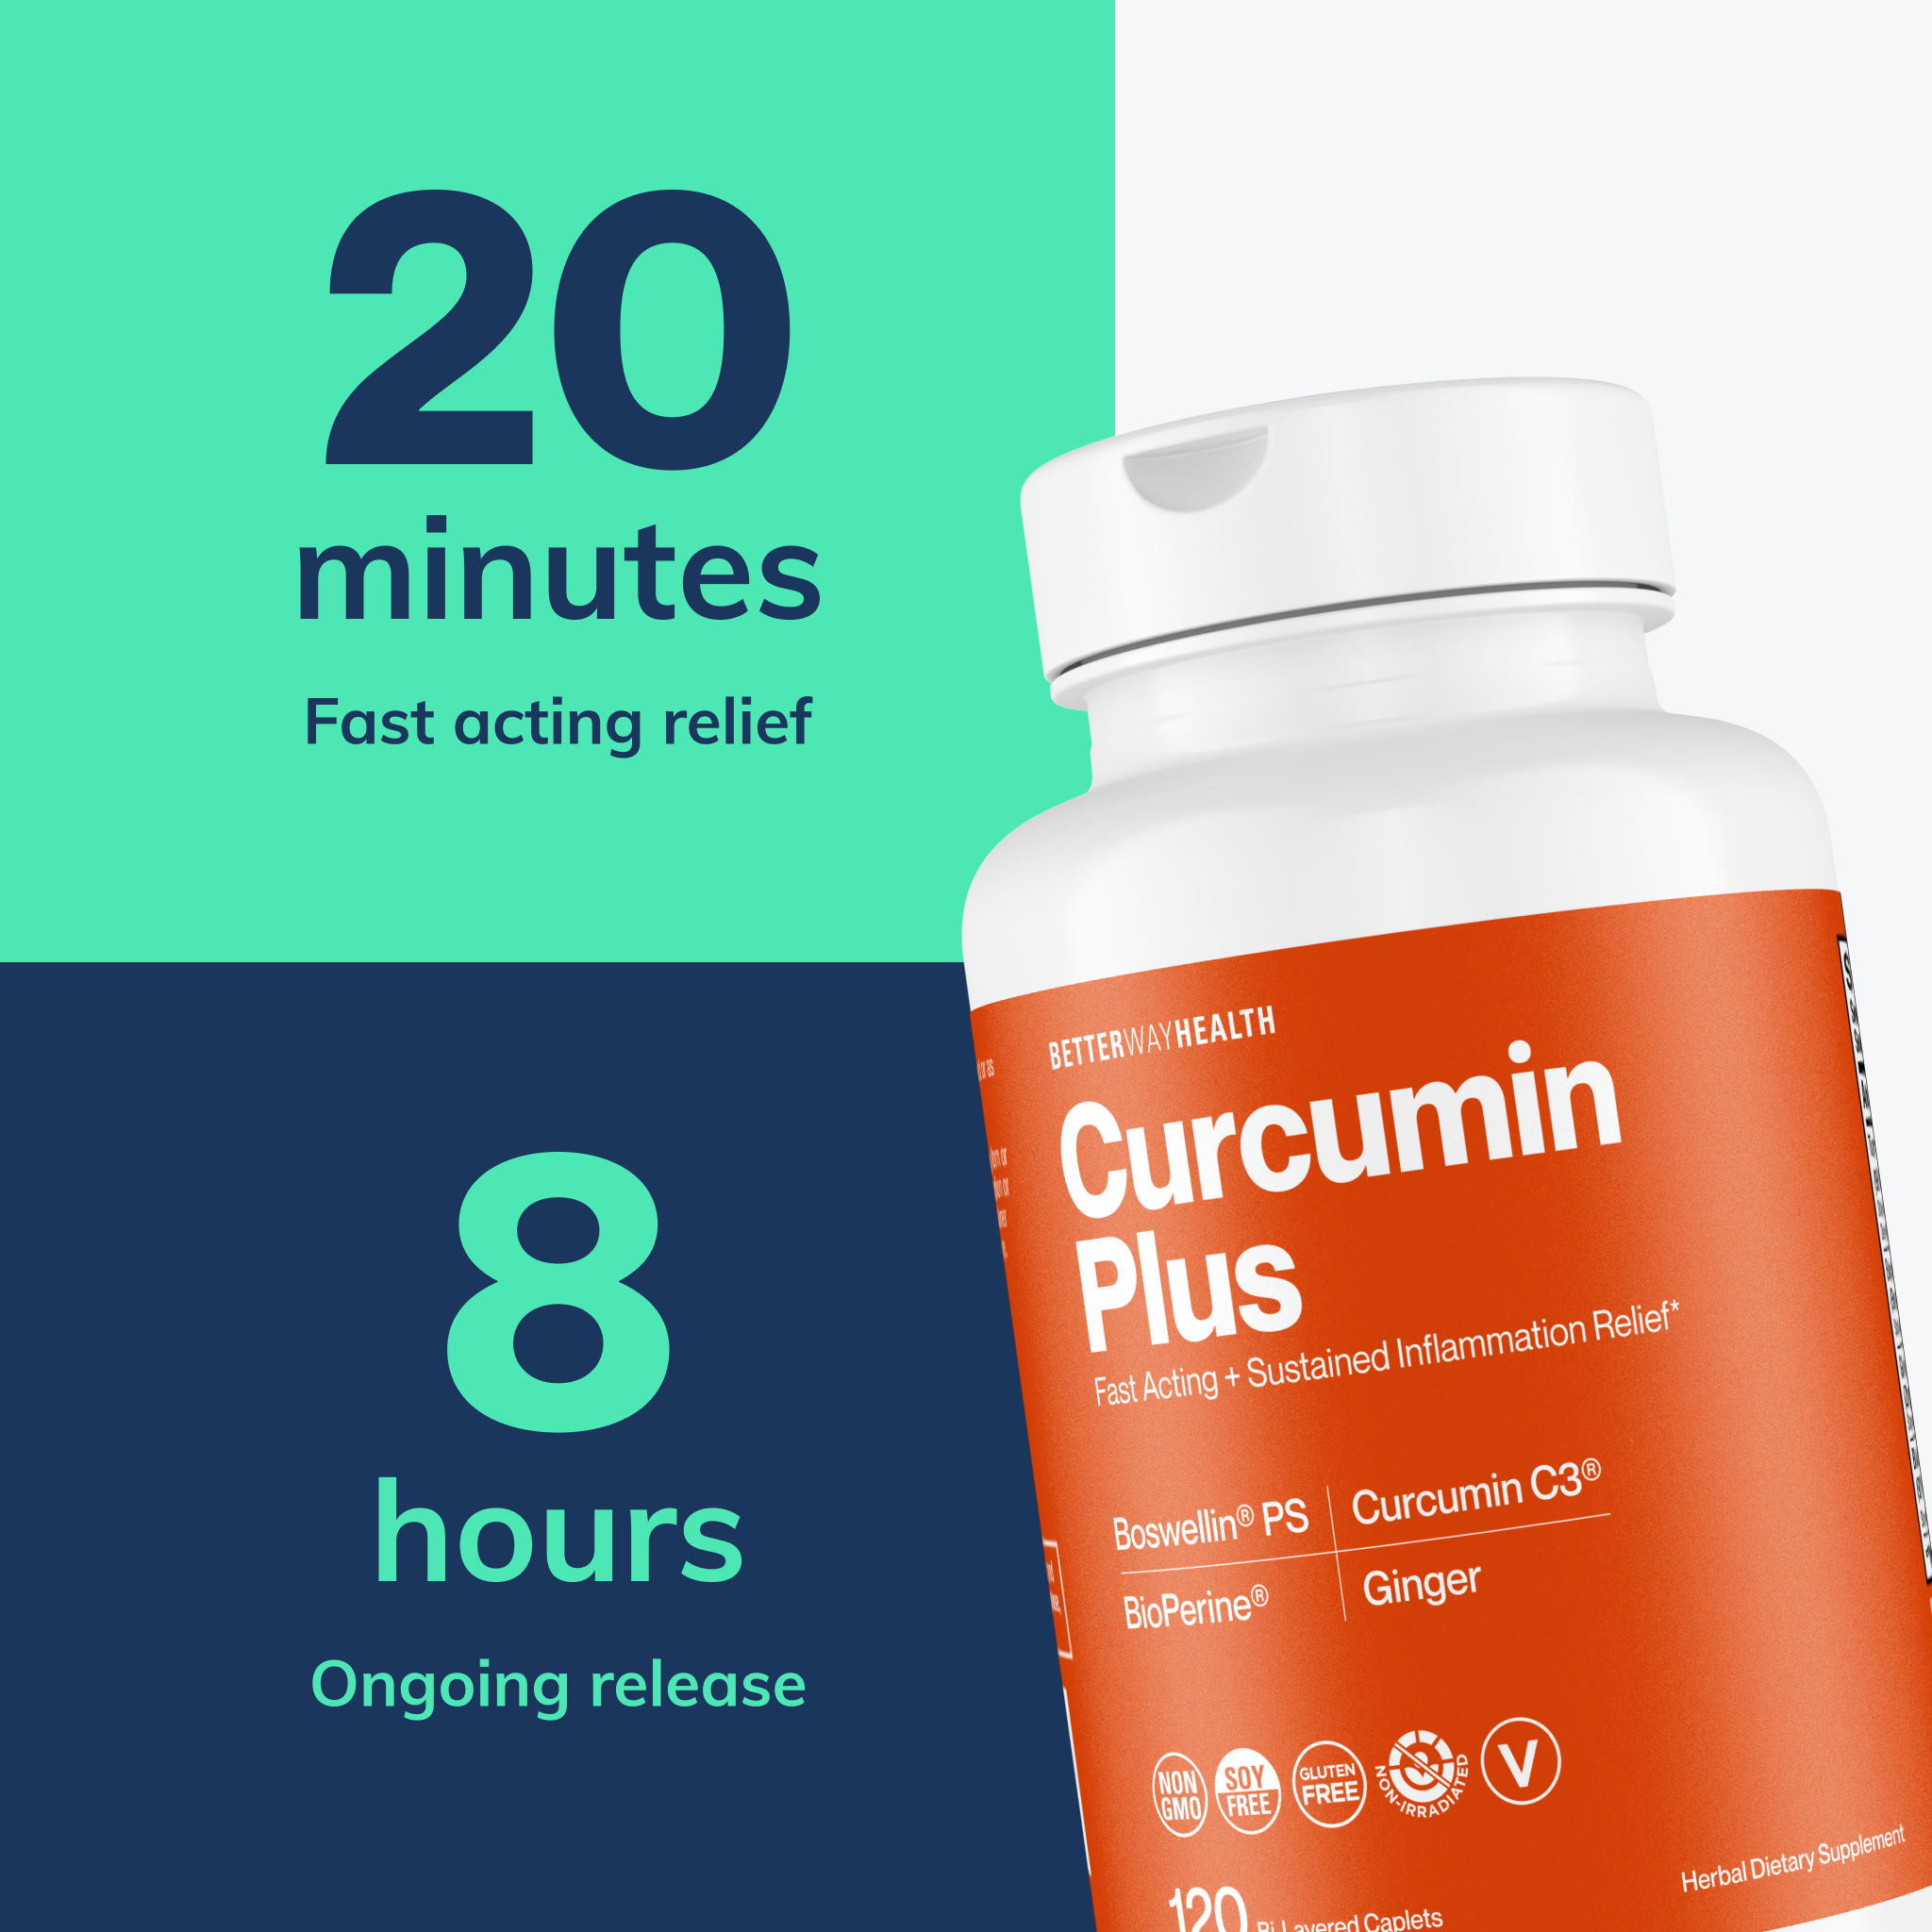  Curcumin Plus by Better Way Health Better Way Health Perfumarie